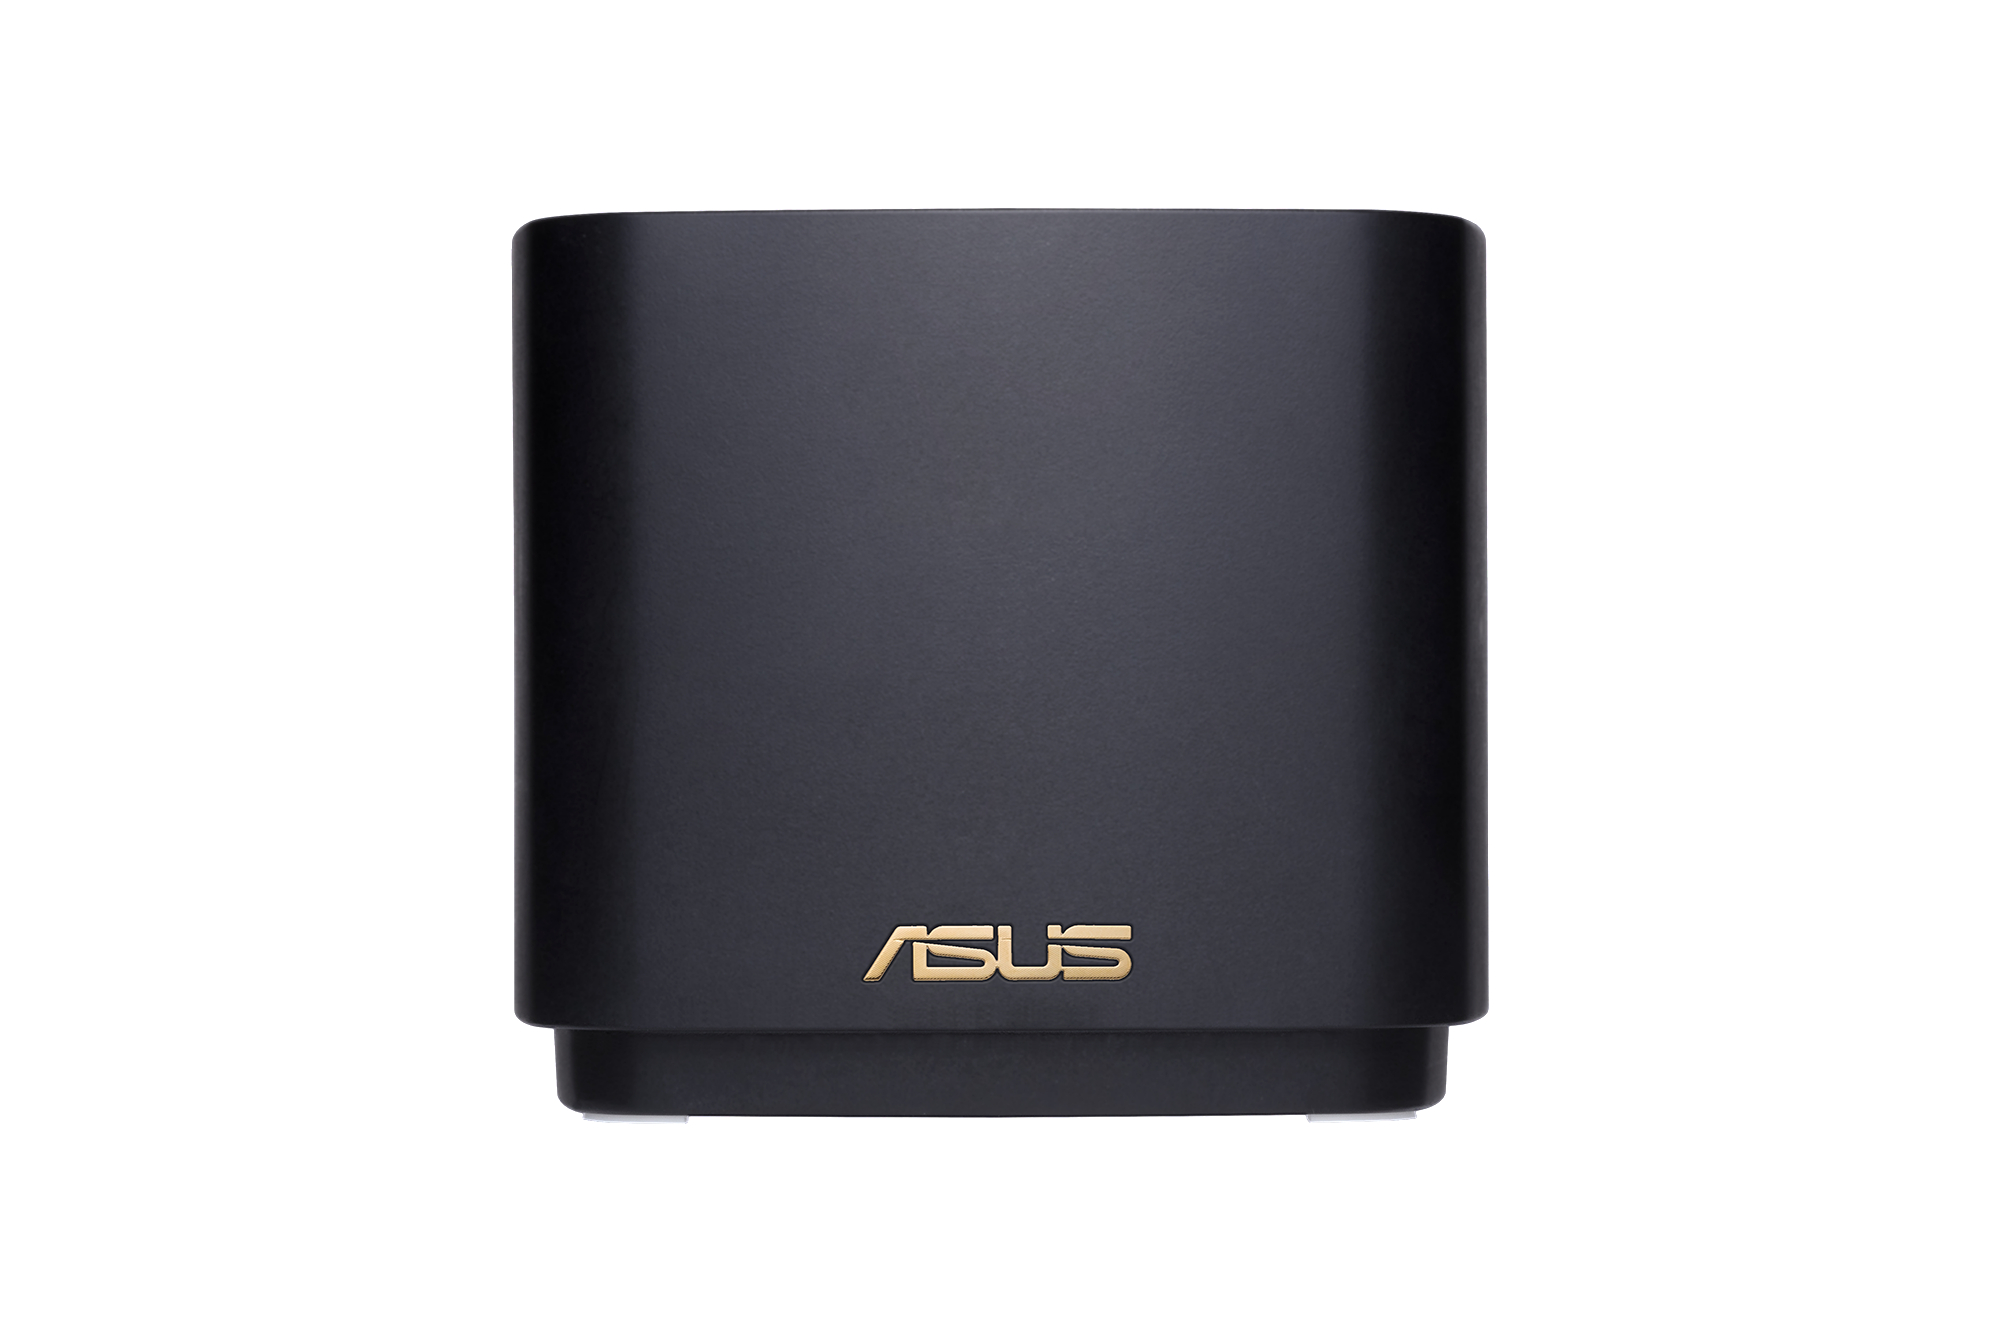 Mini ASUS 2er AX Schwarz Set AX1800 System ZenWiFi WiFi-6 (XD4) Mesh